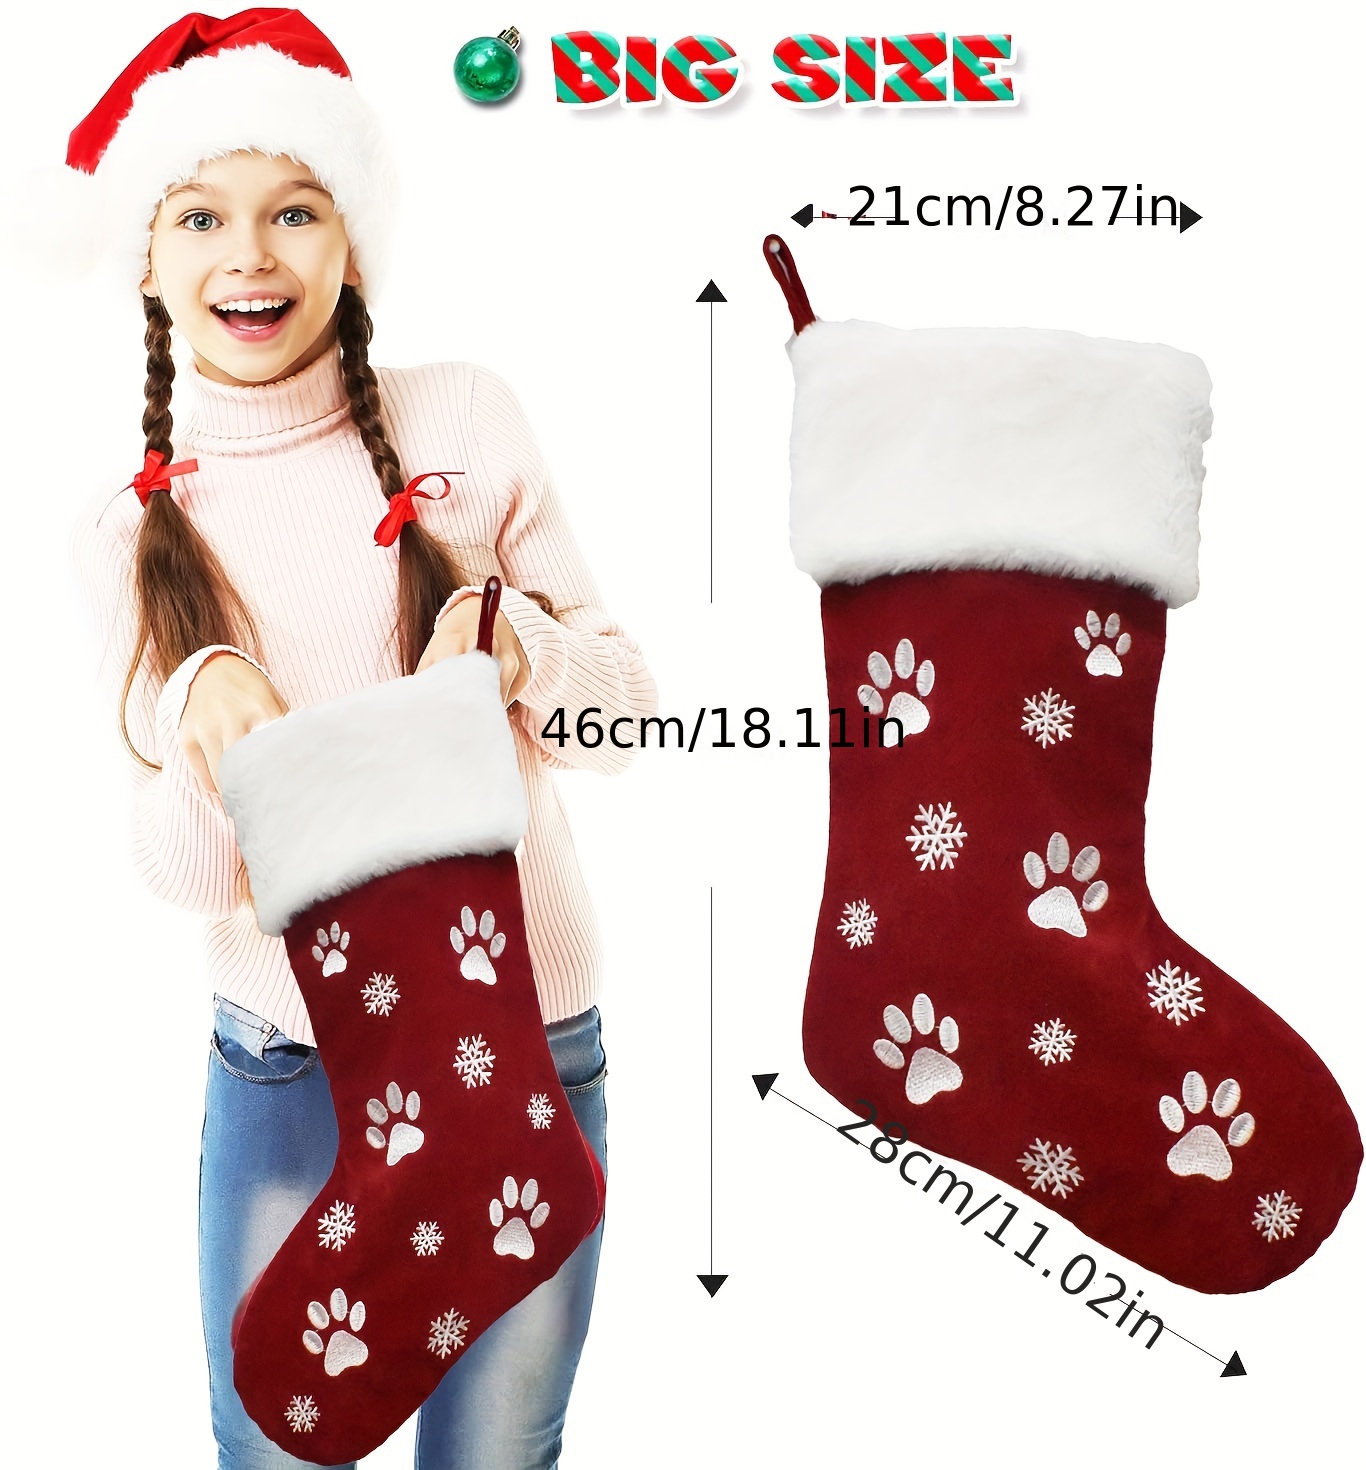 Two Red Green Felt Christmas Stockings w/Doggie Santa Pix. 15 Long.